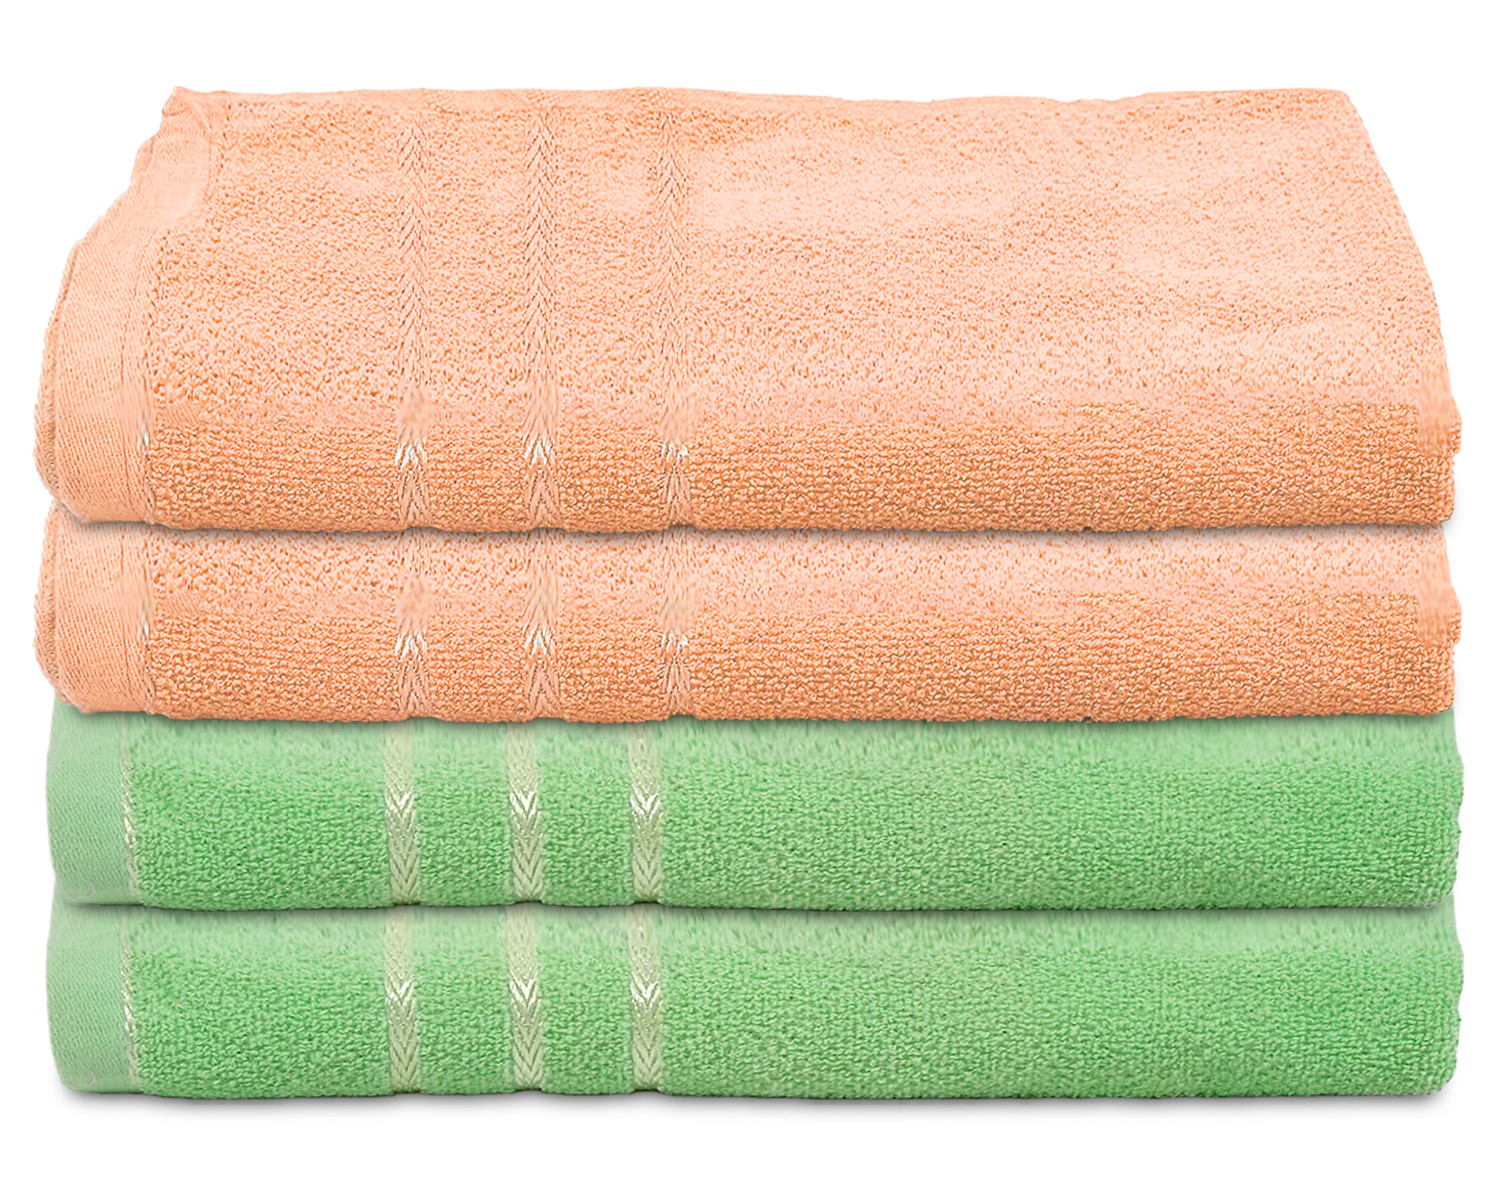 Kuber Industries Soft Cotton Bath Towel For Hands, Face, Newborn Babies, Toddlers, Children, 19